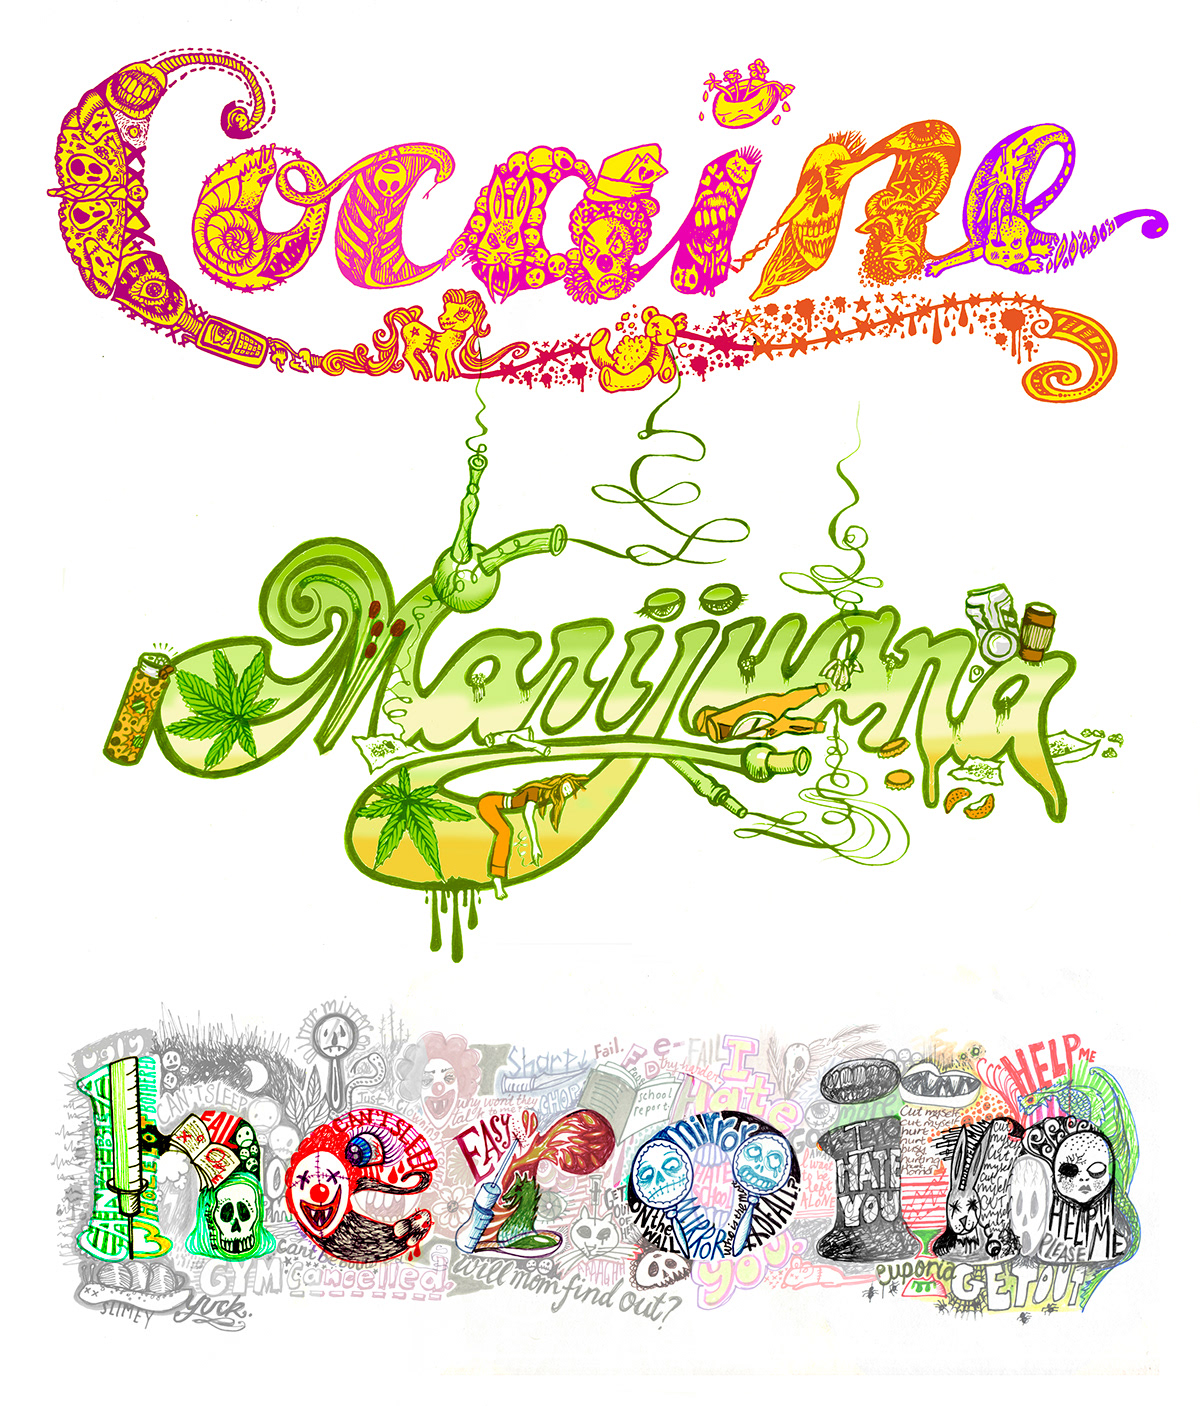 cocaine marijuana heroin Drugs narcotics weed coke